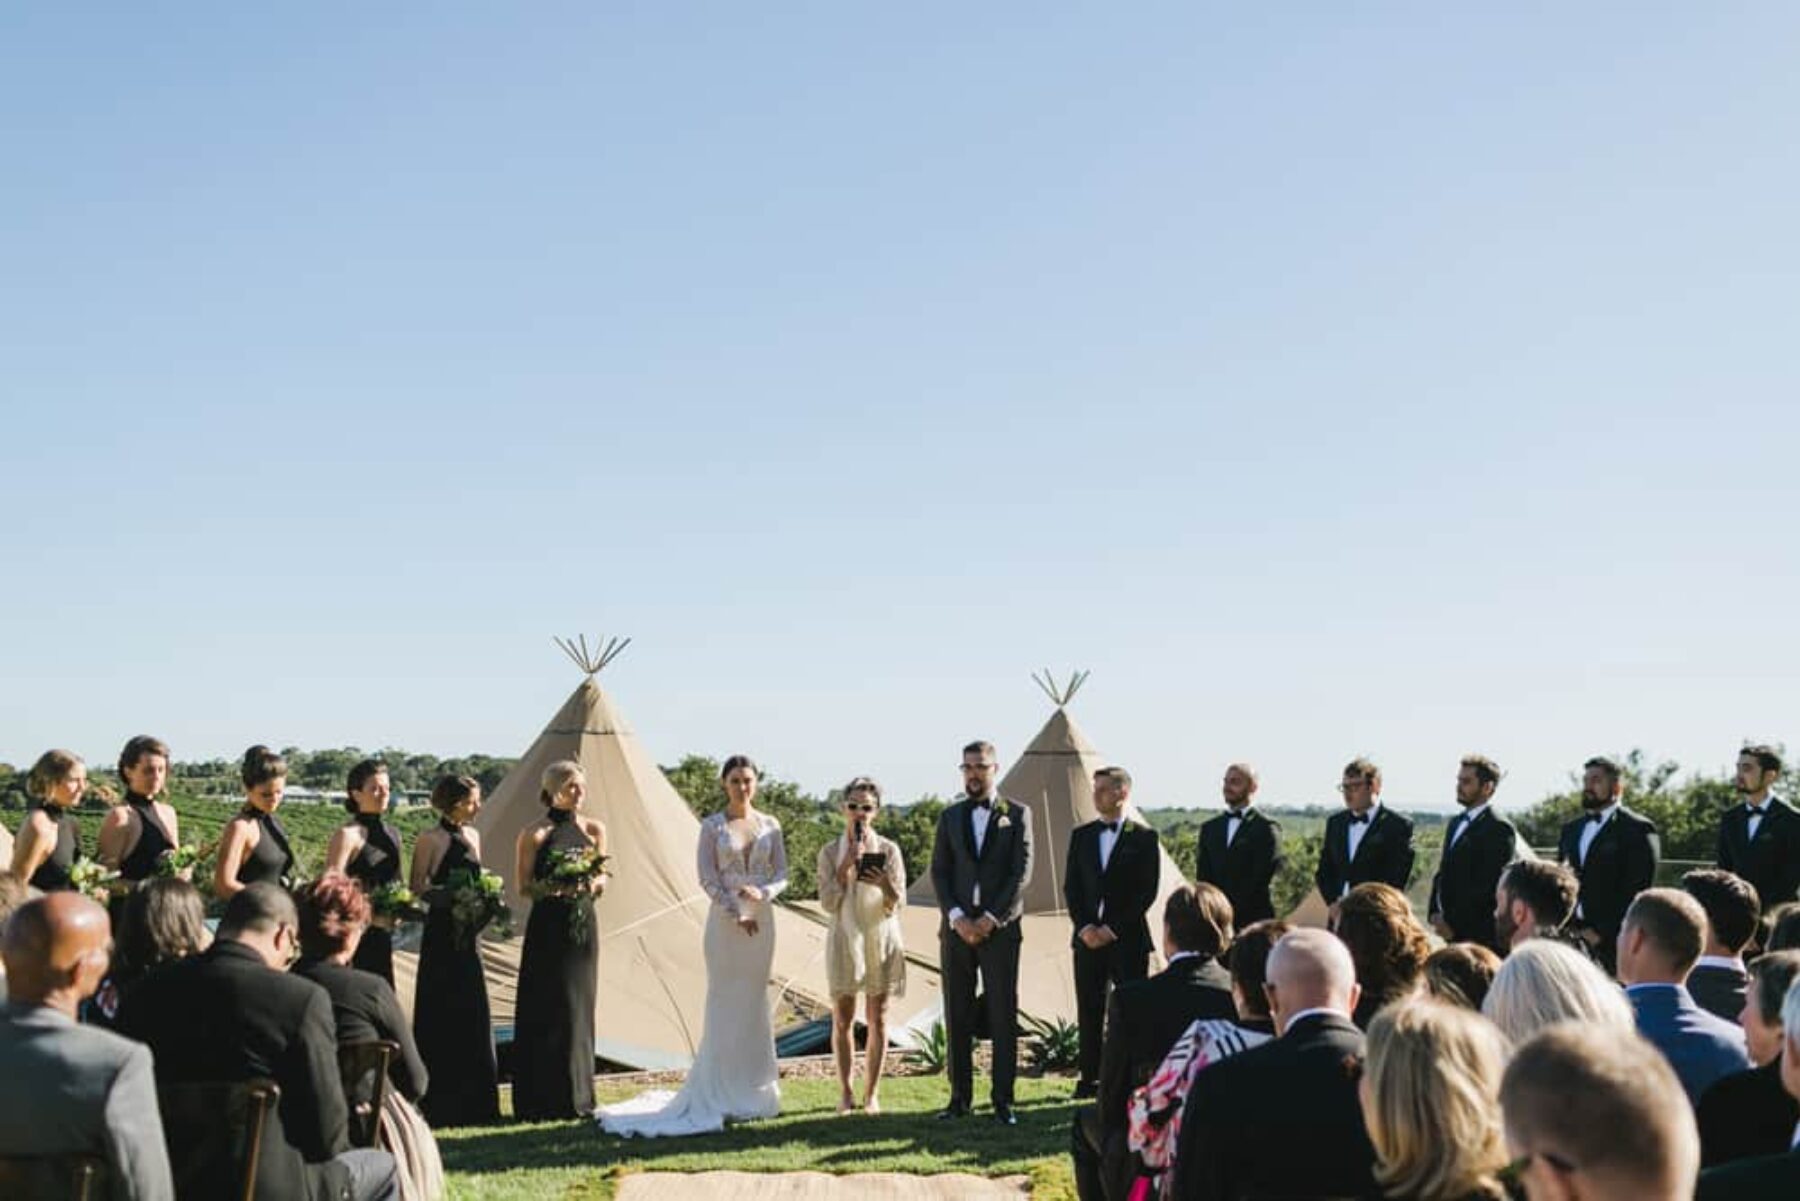 Tipi wedding at The Grove at Byron Bay / Photography by John Benavente